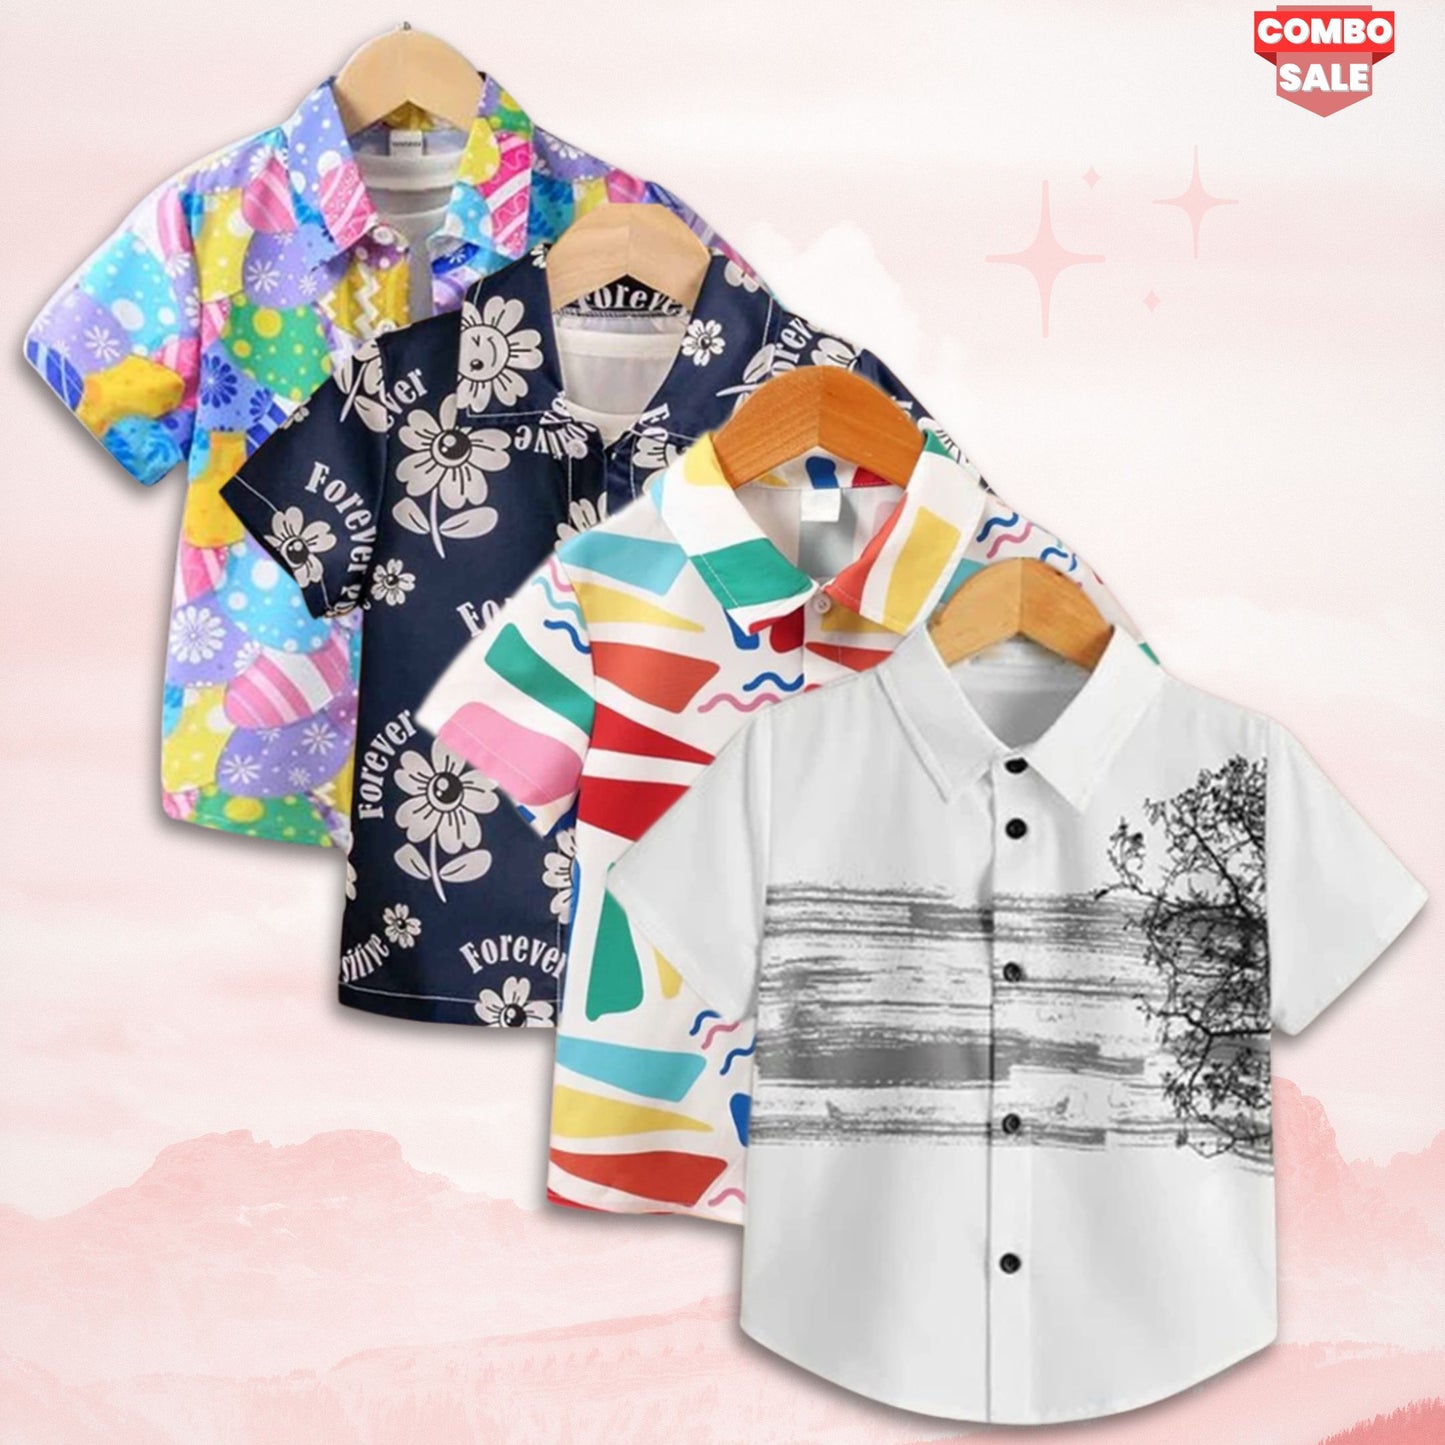 Venutaloza Boy's Stylish Colorful Graphic Multicolors Designer Button Front (Combo pack For 4) Shirt For Boy.